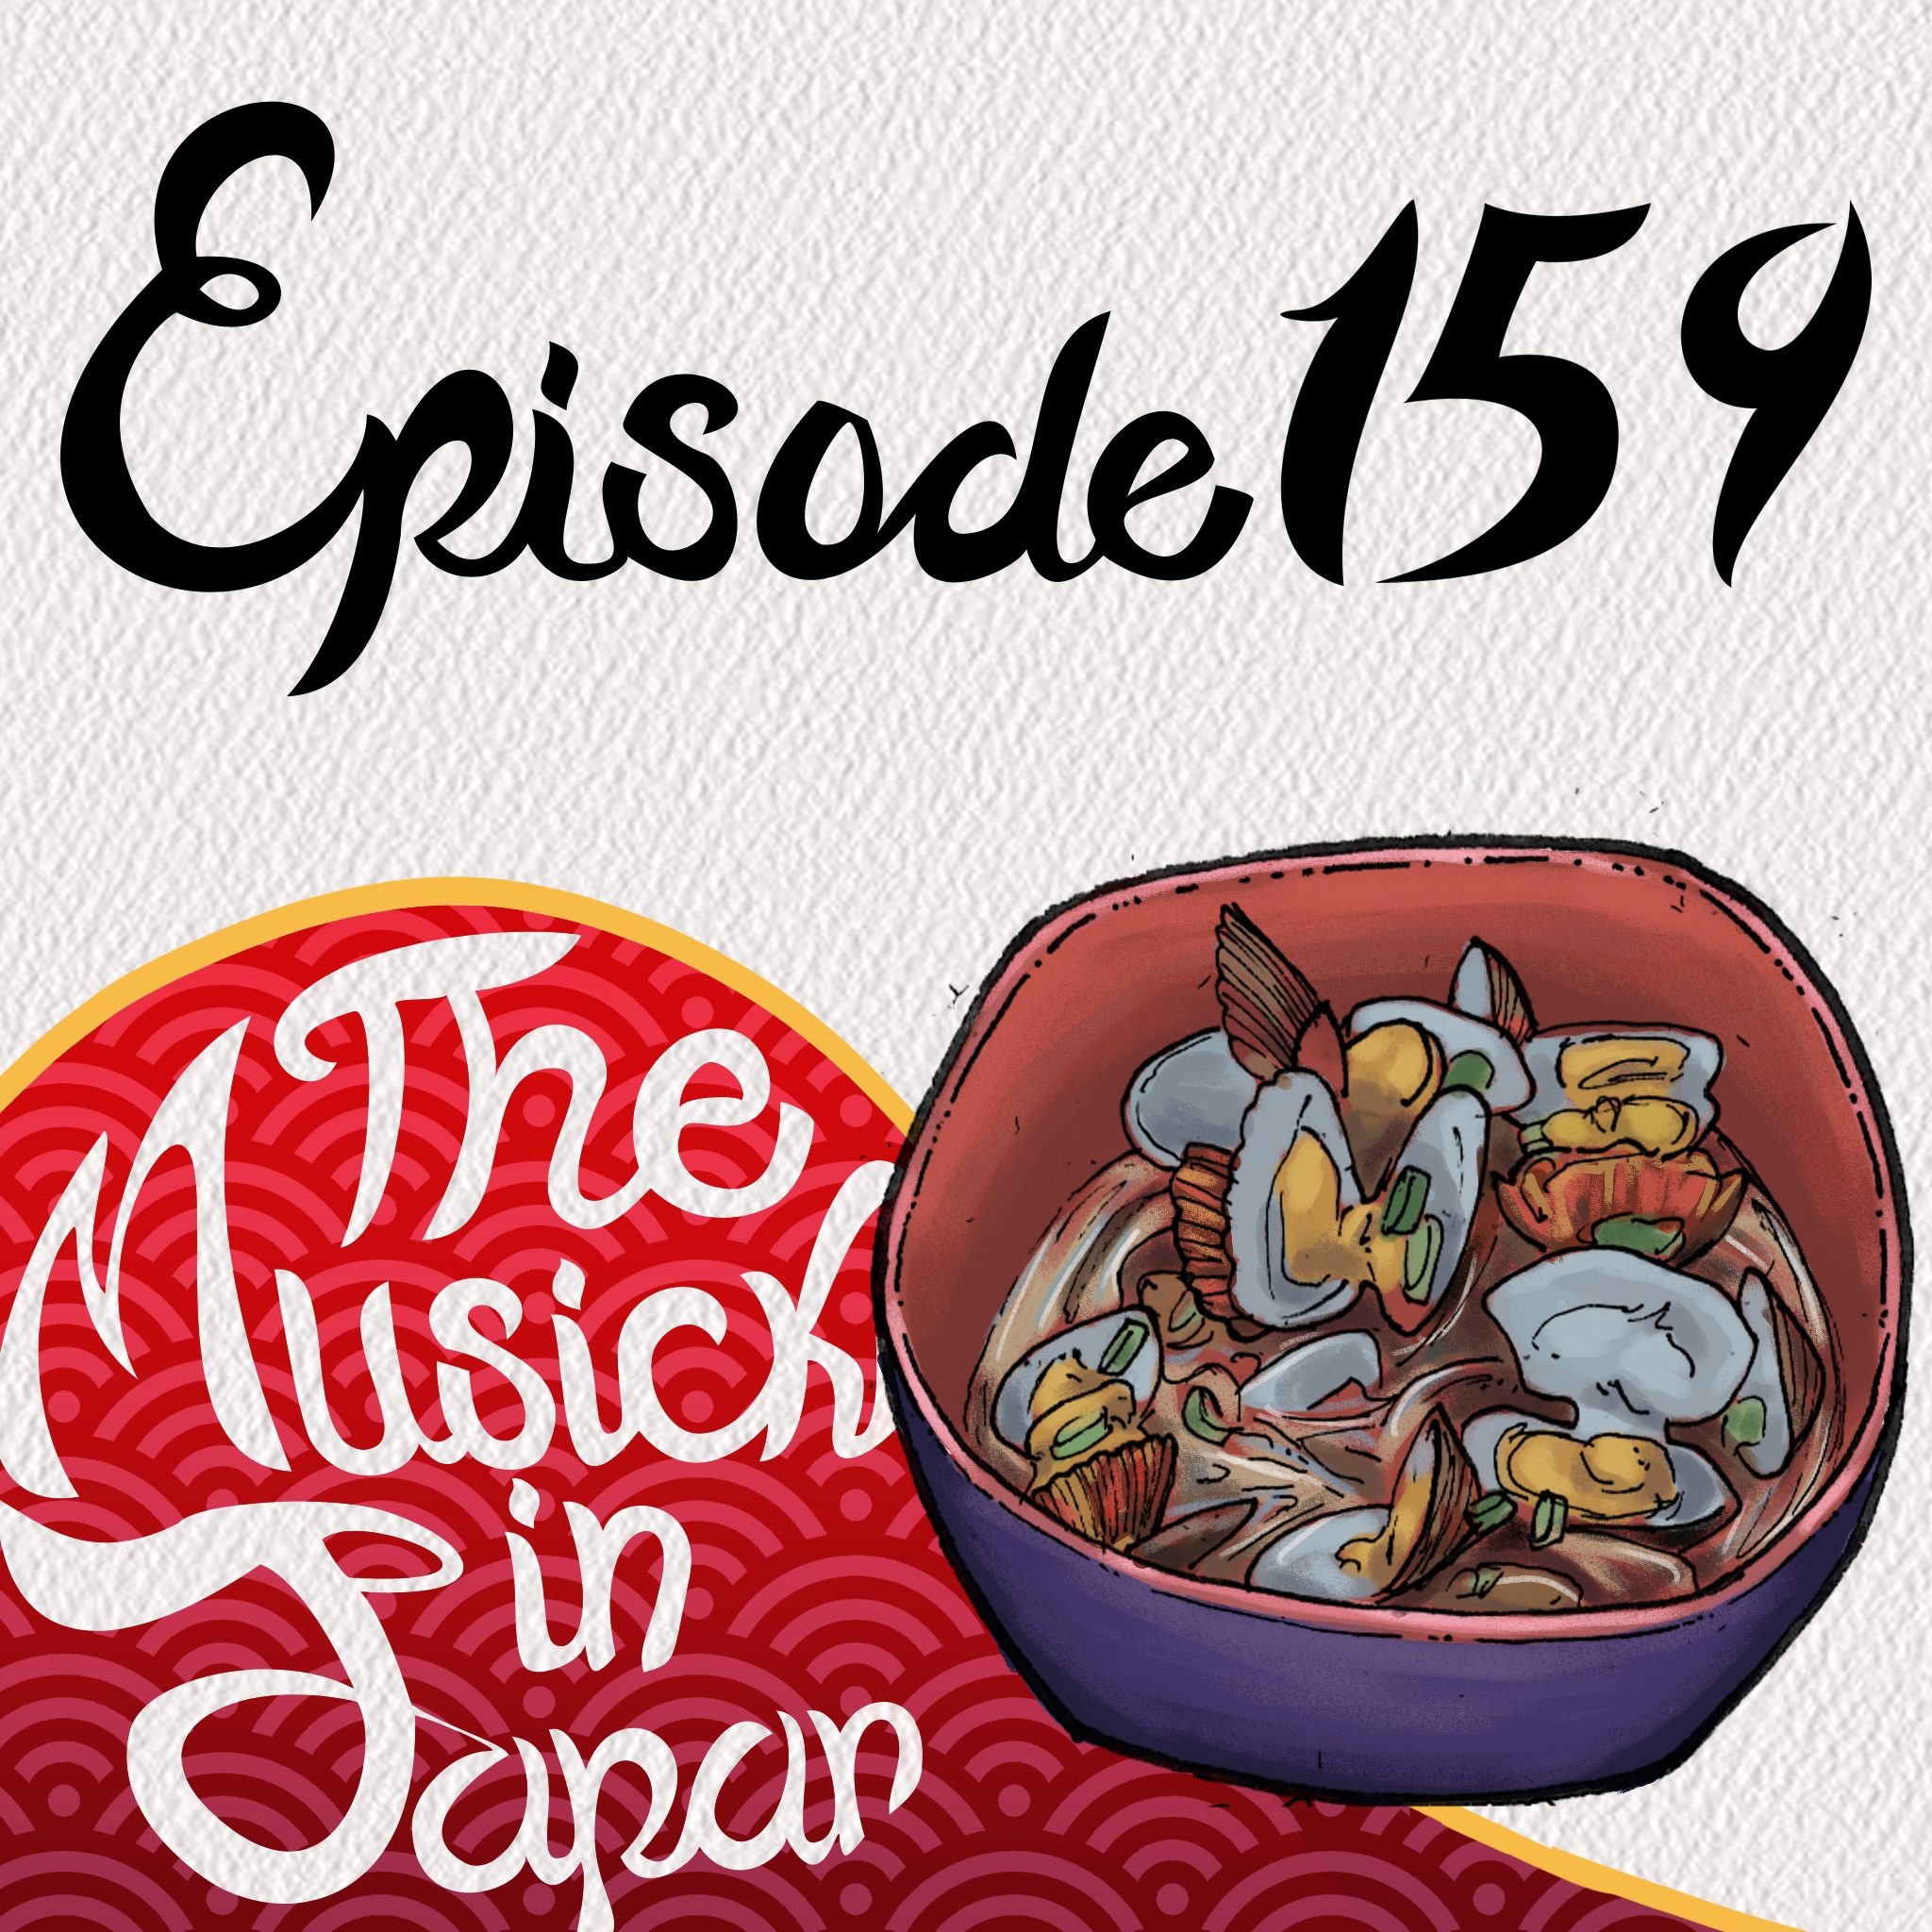 Episode 159: Medical Care in Japan vs the U.S.